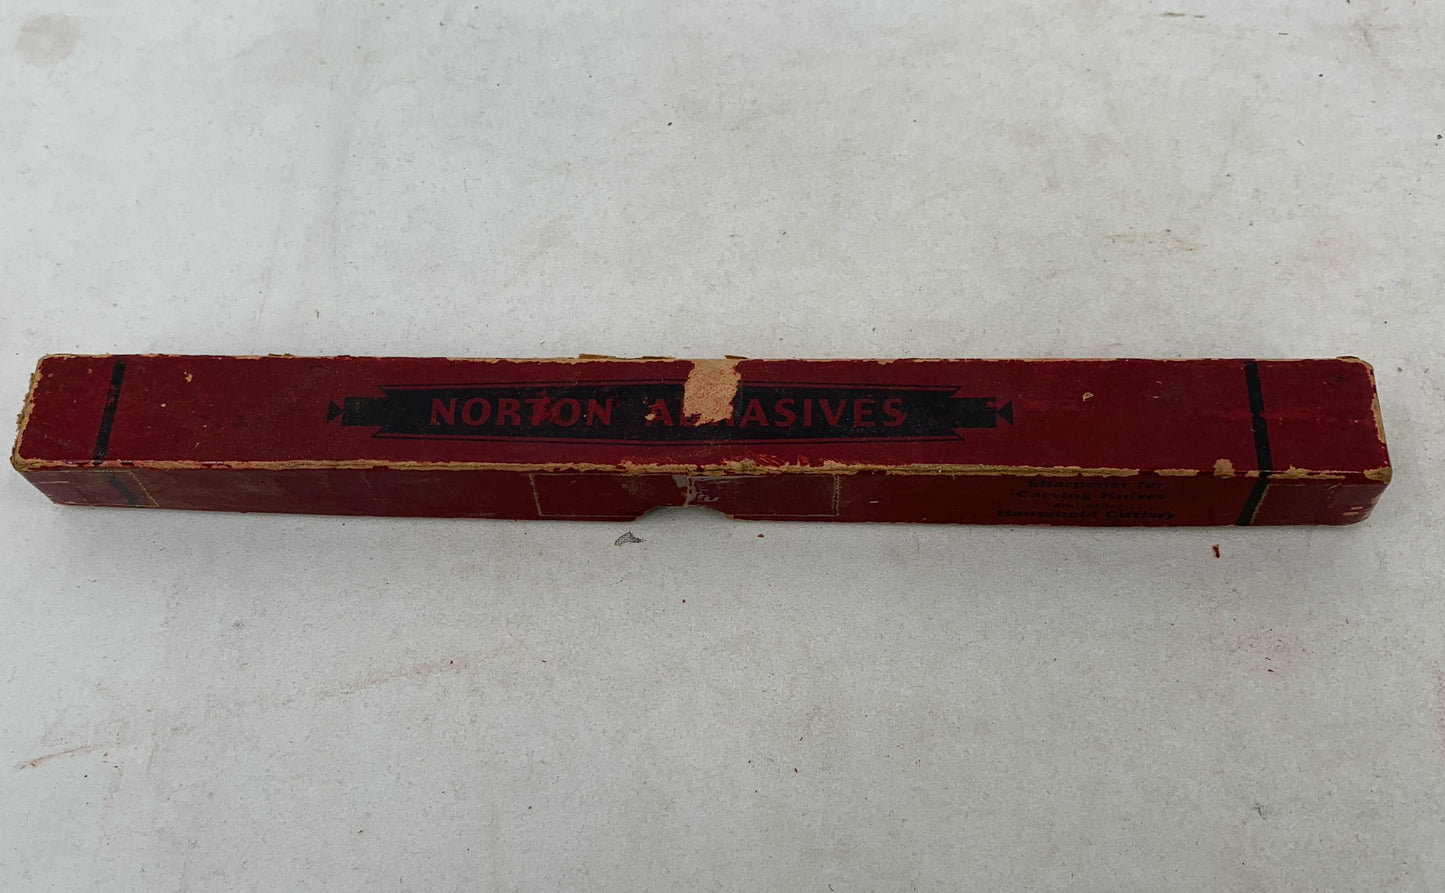 Norton Company Abrasives Knife Sharpener 11.25" In Original Box